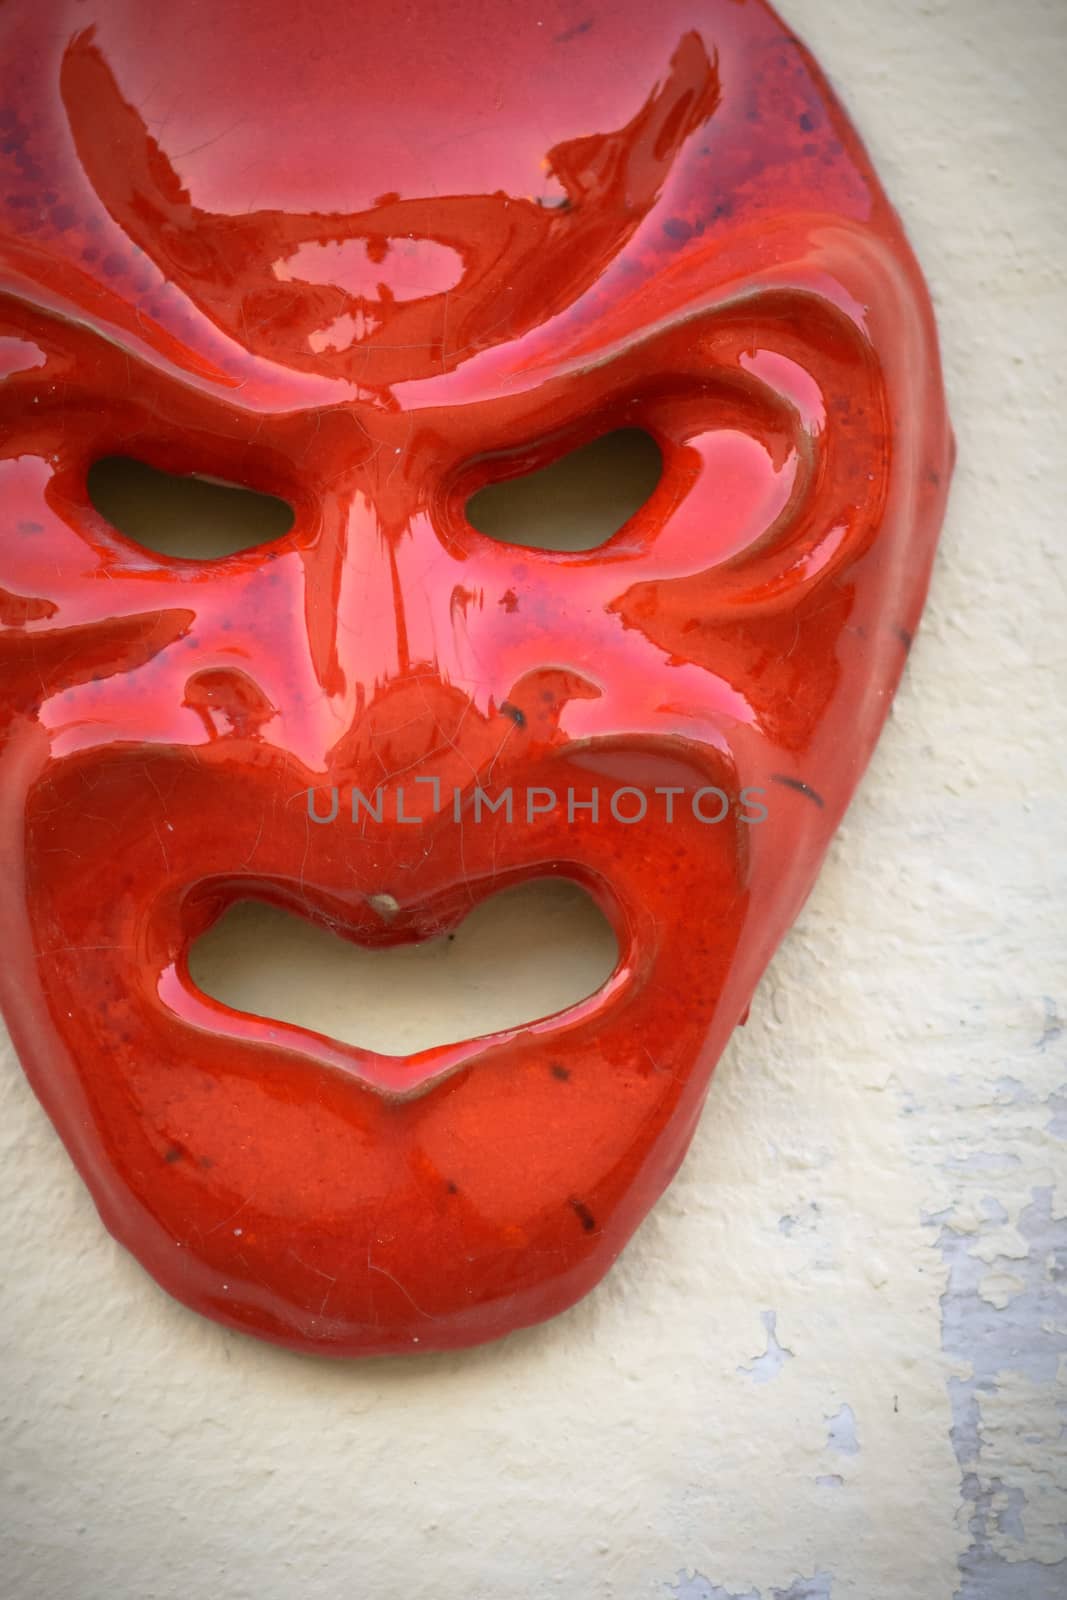 evil mask by cedicocinovo